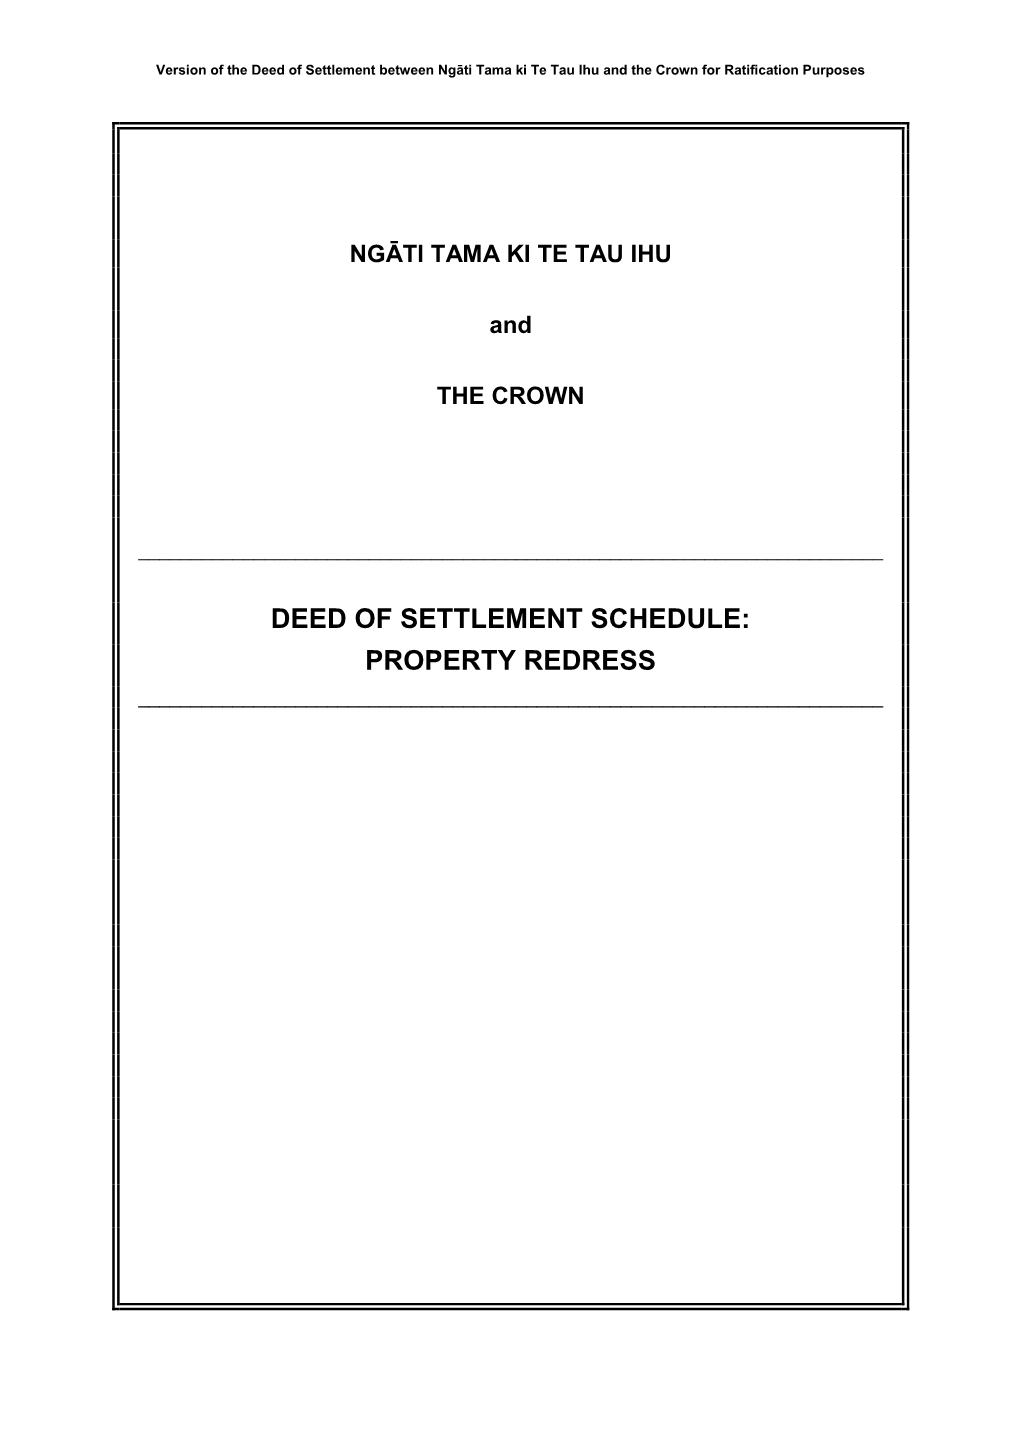 Deed of Settlement Schedule: Property Redress ______